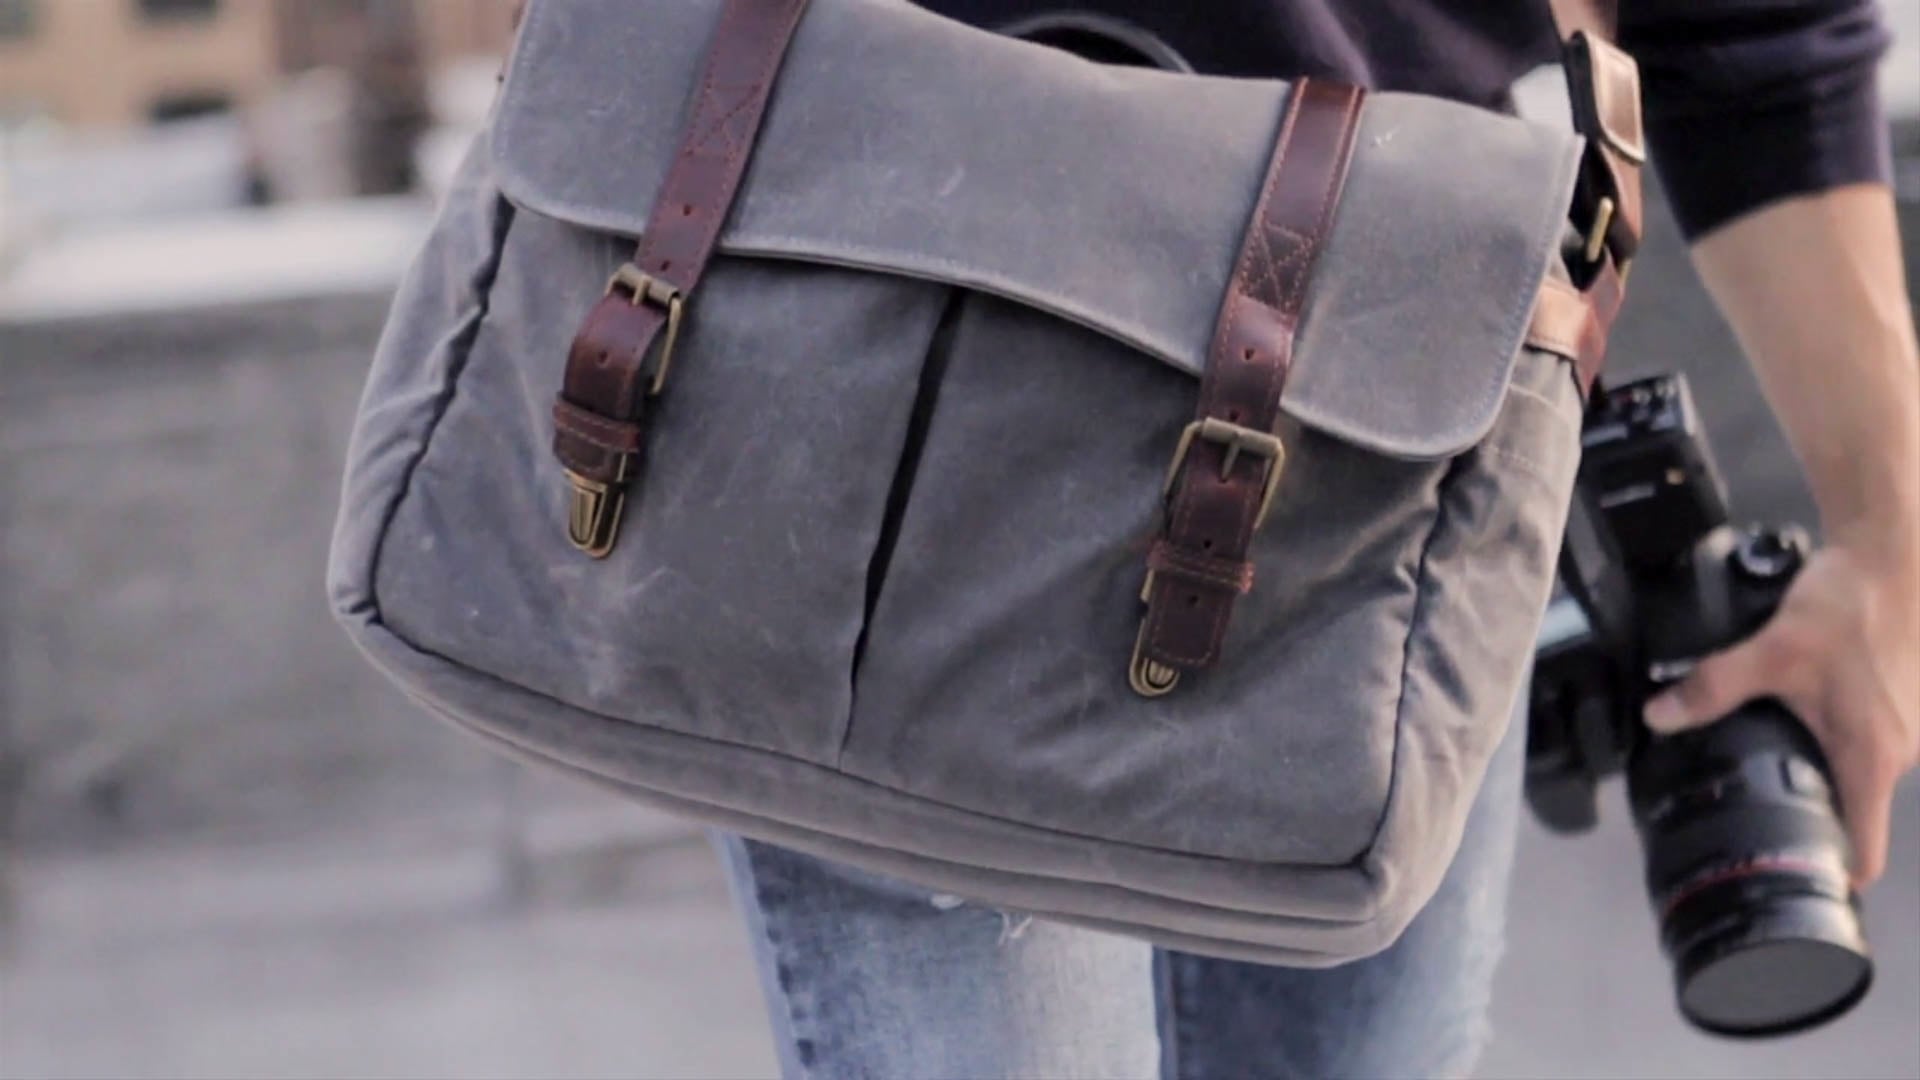 The Brixton Camera and Laptop Messenger Bag on Vimeo